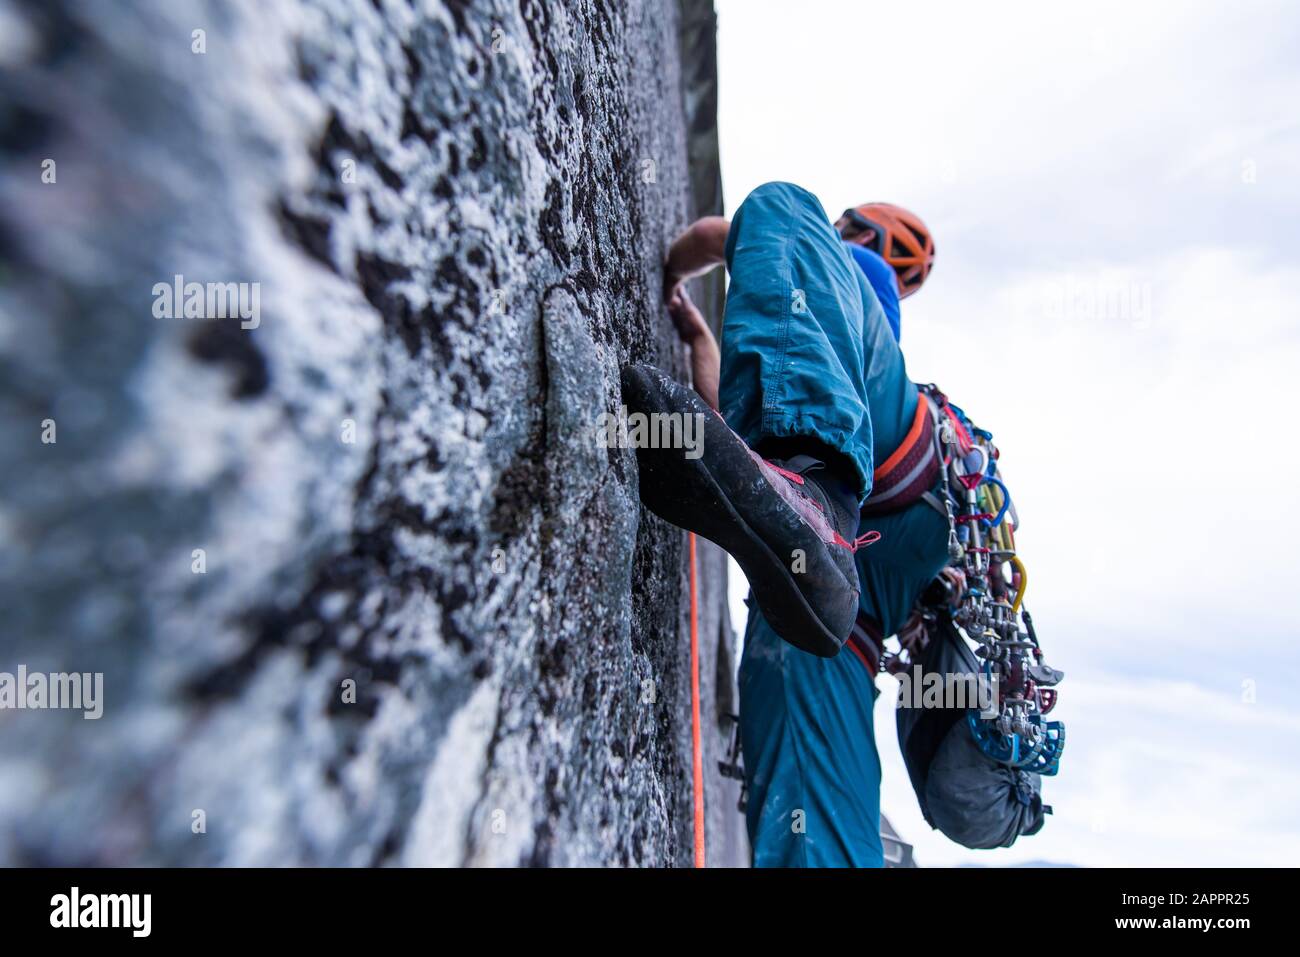 Trad climbing, Stawamus Chief, Squamish, British Columbia, Canada Stock Photo